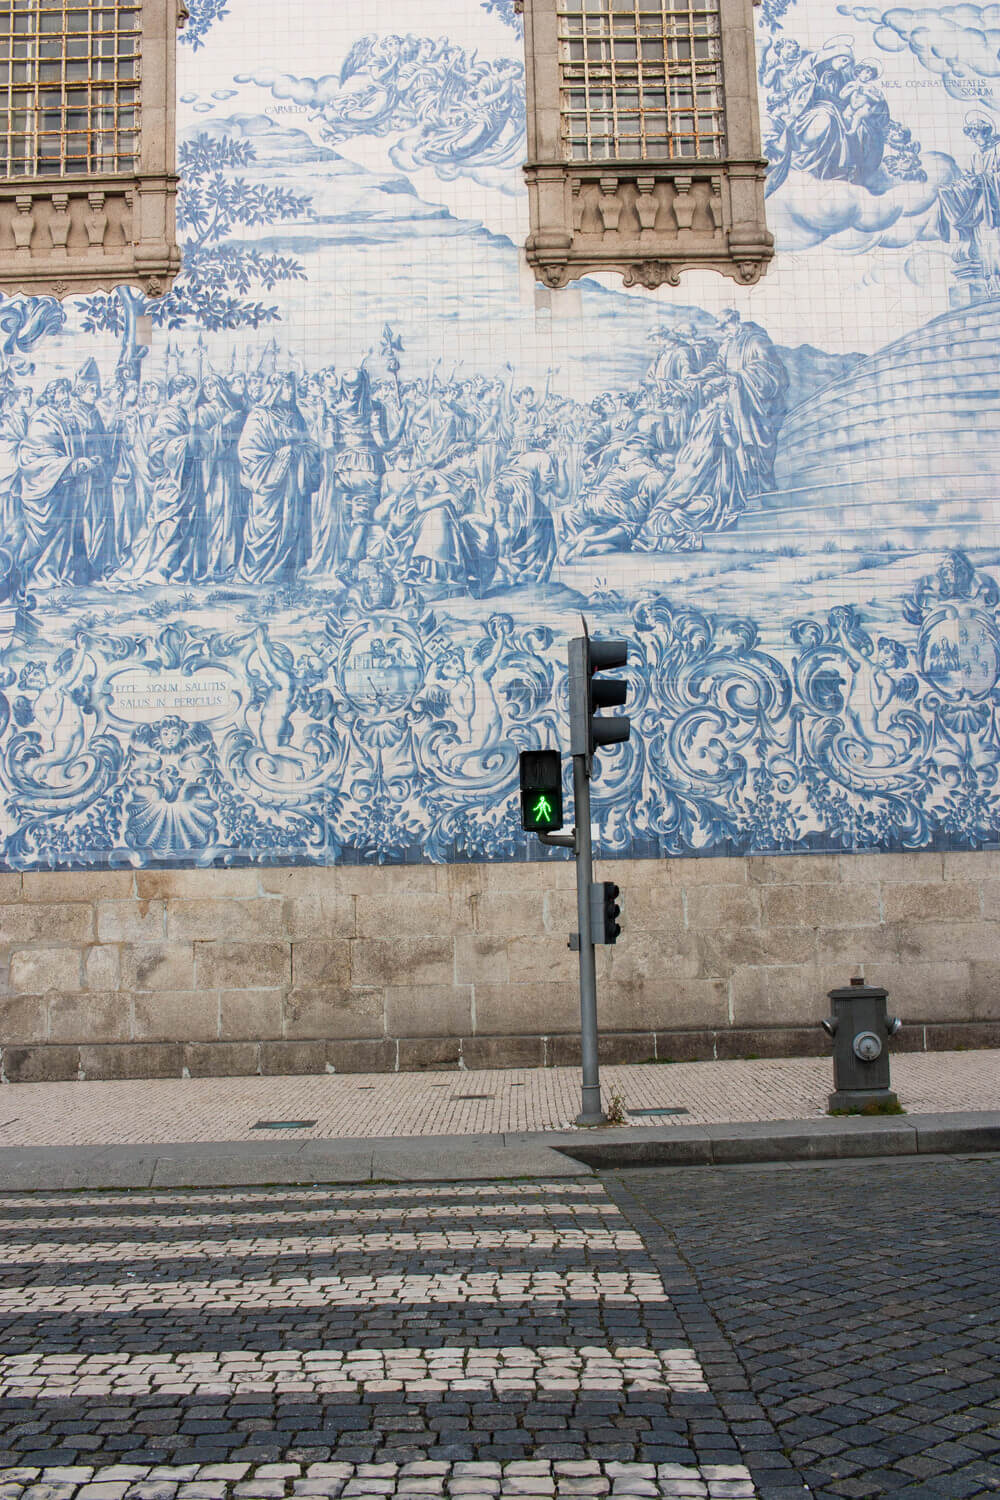 Igreja do Carmo (Porto) with crosswalk and fire hydrant.